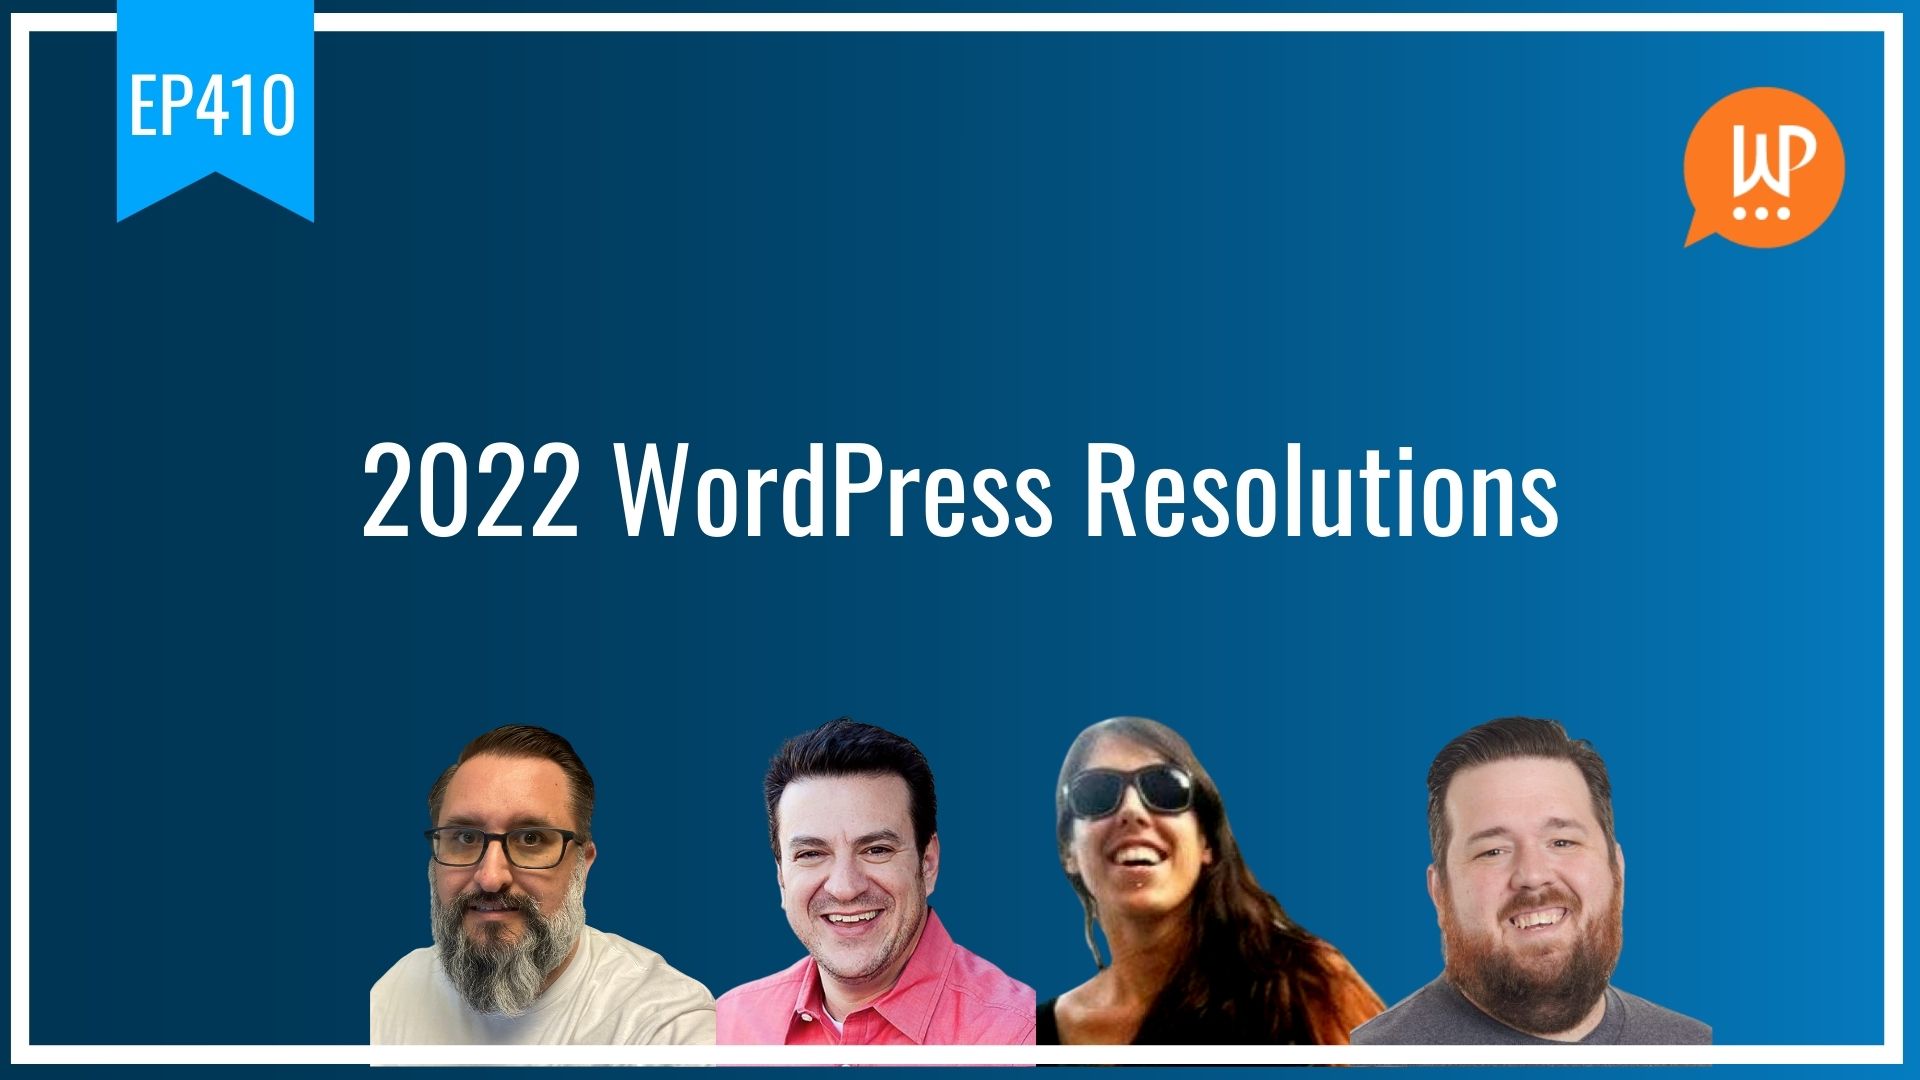 EP410 – 2022 WordPress Resolutions